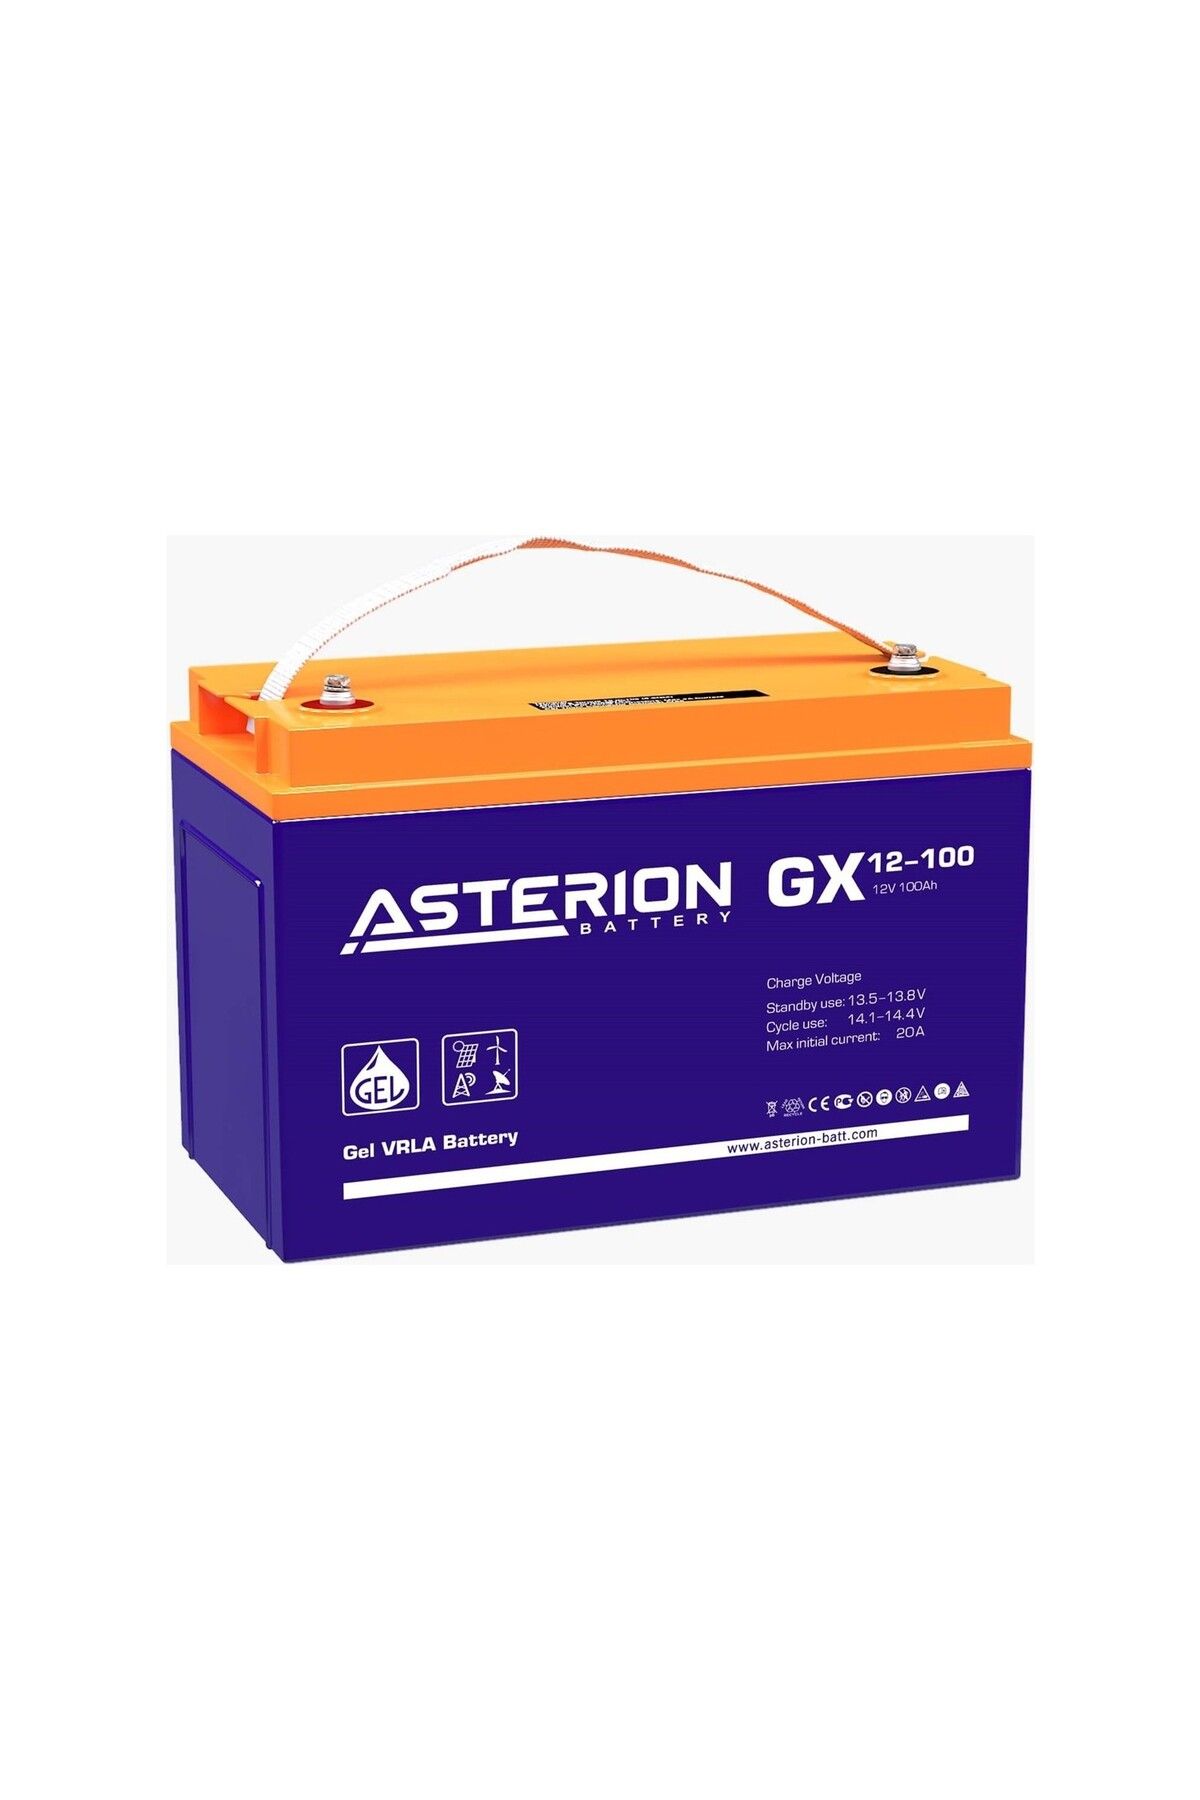 Asterion Gx 12v 100Ah Jel Akü